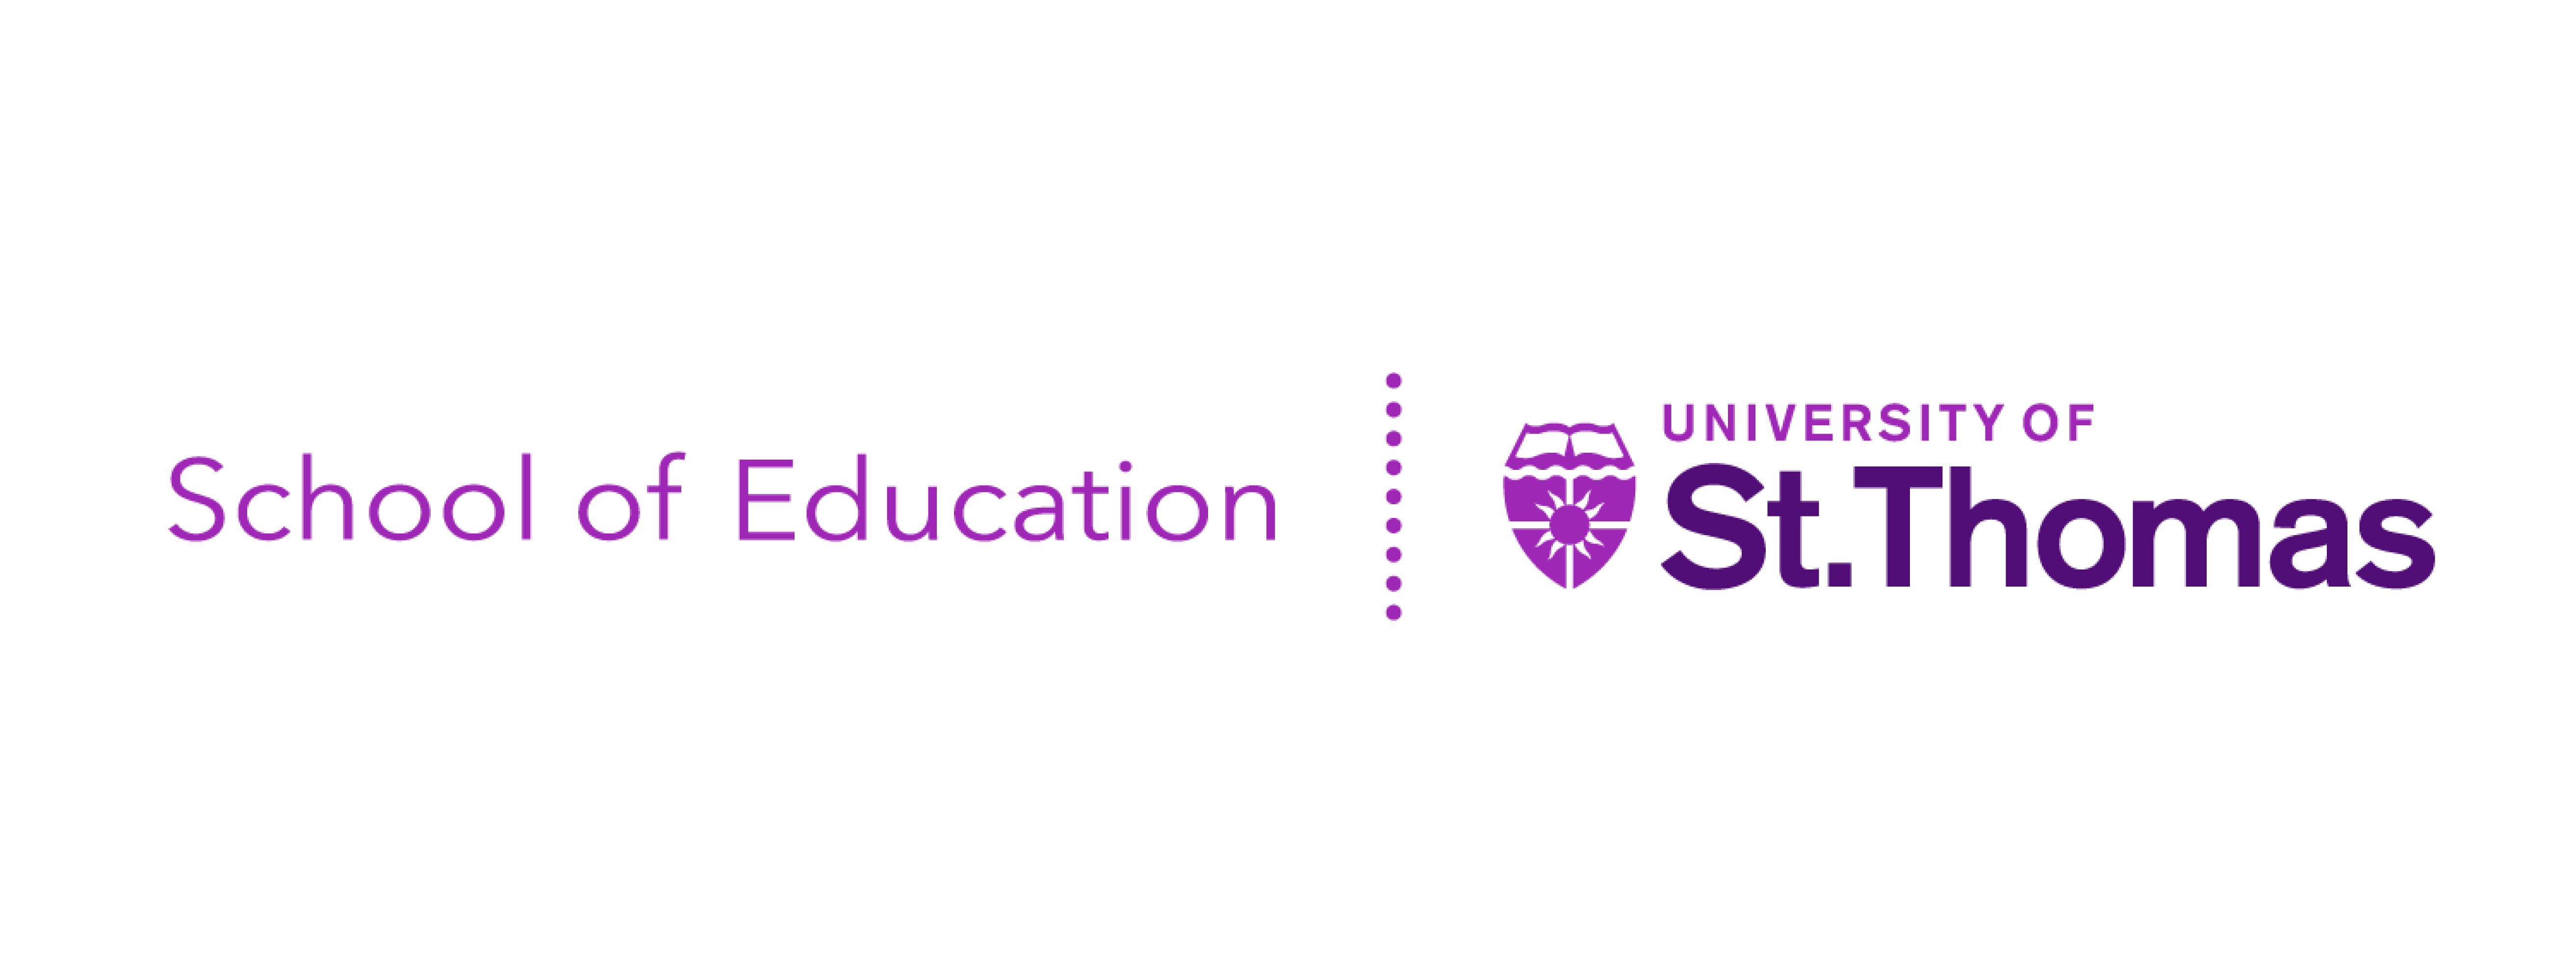 School of Education University of St. Thomas, logo.